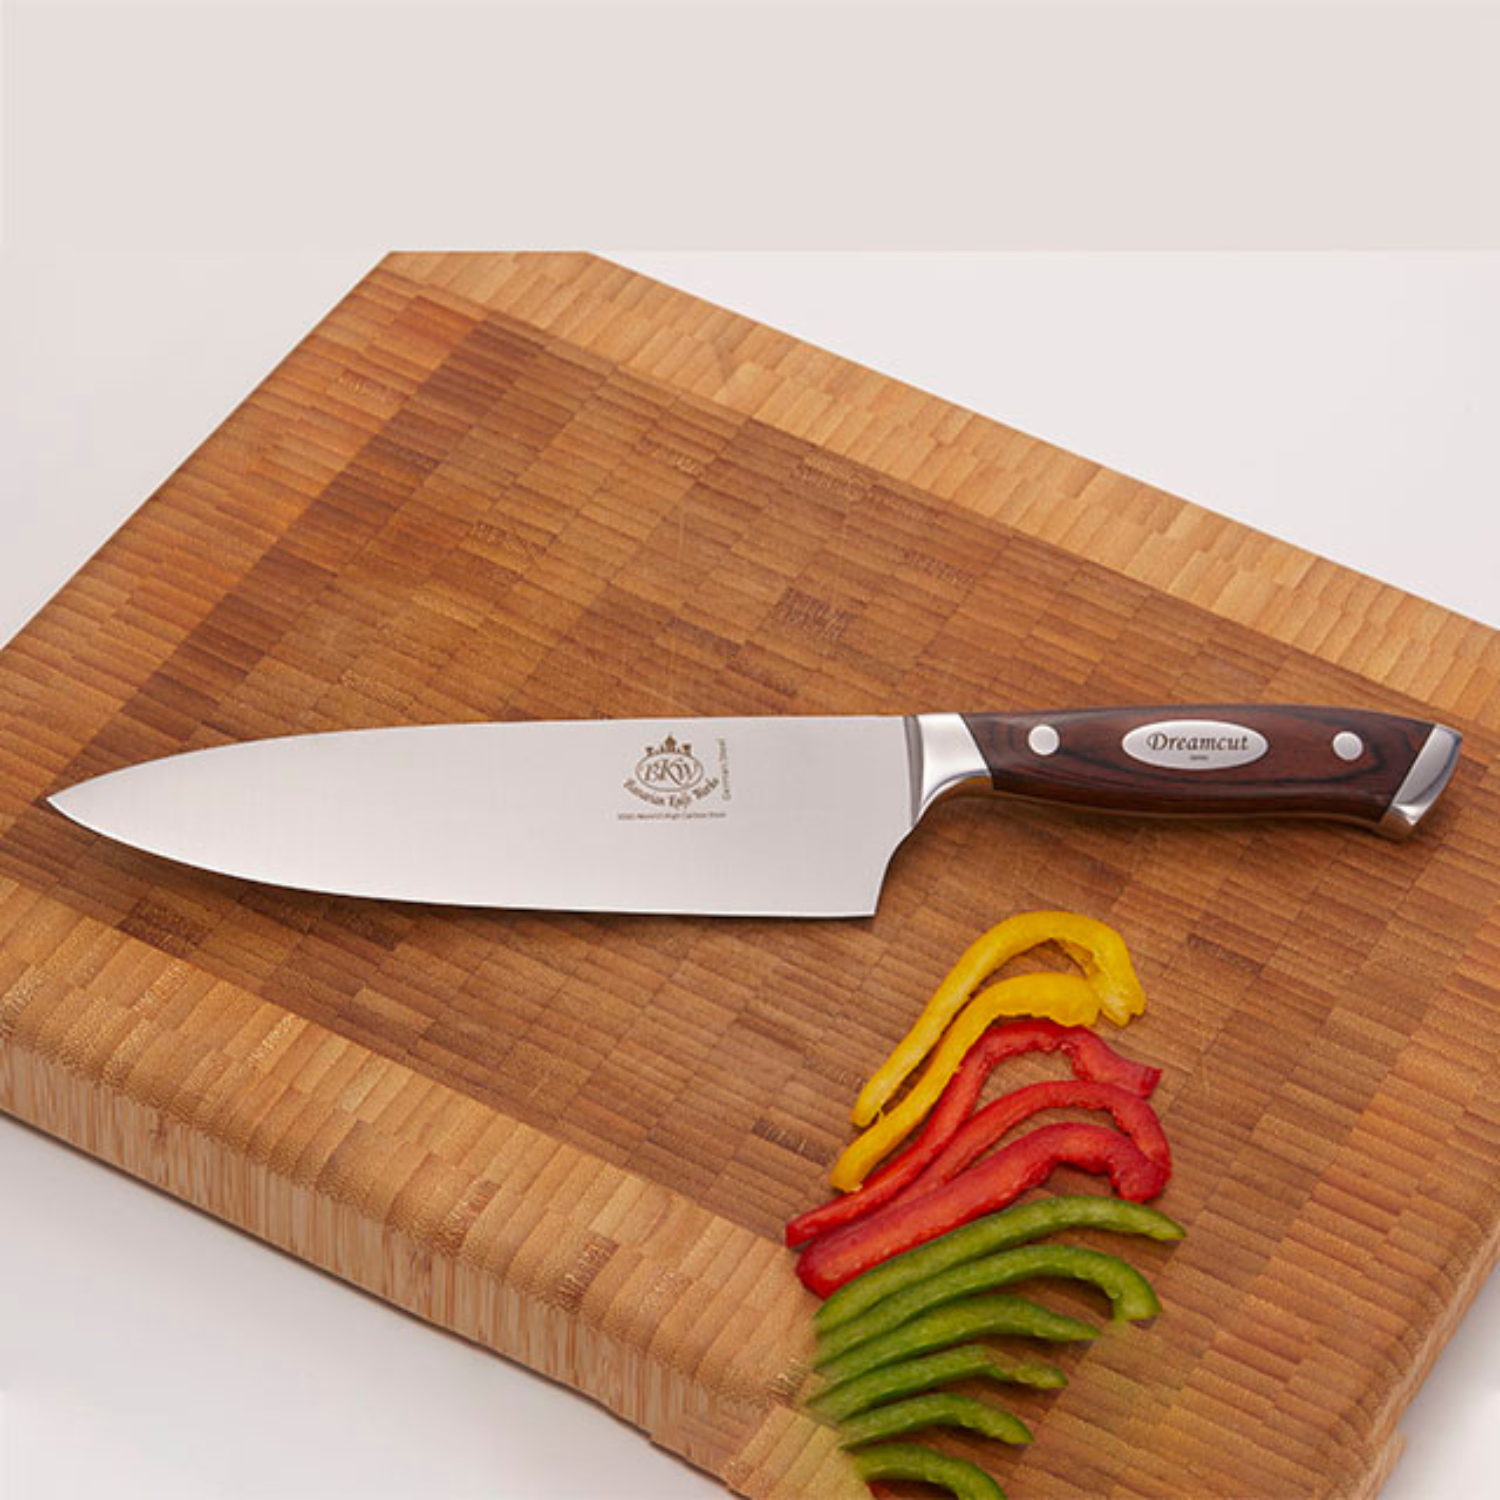 Chef's Victorinox Knife Set